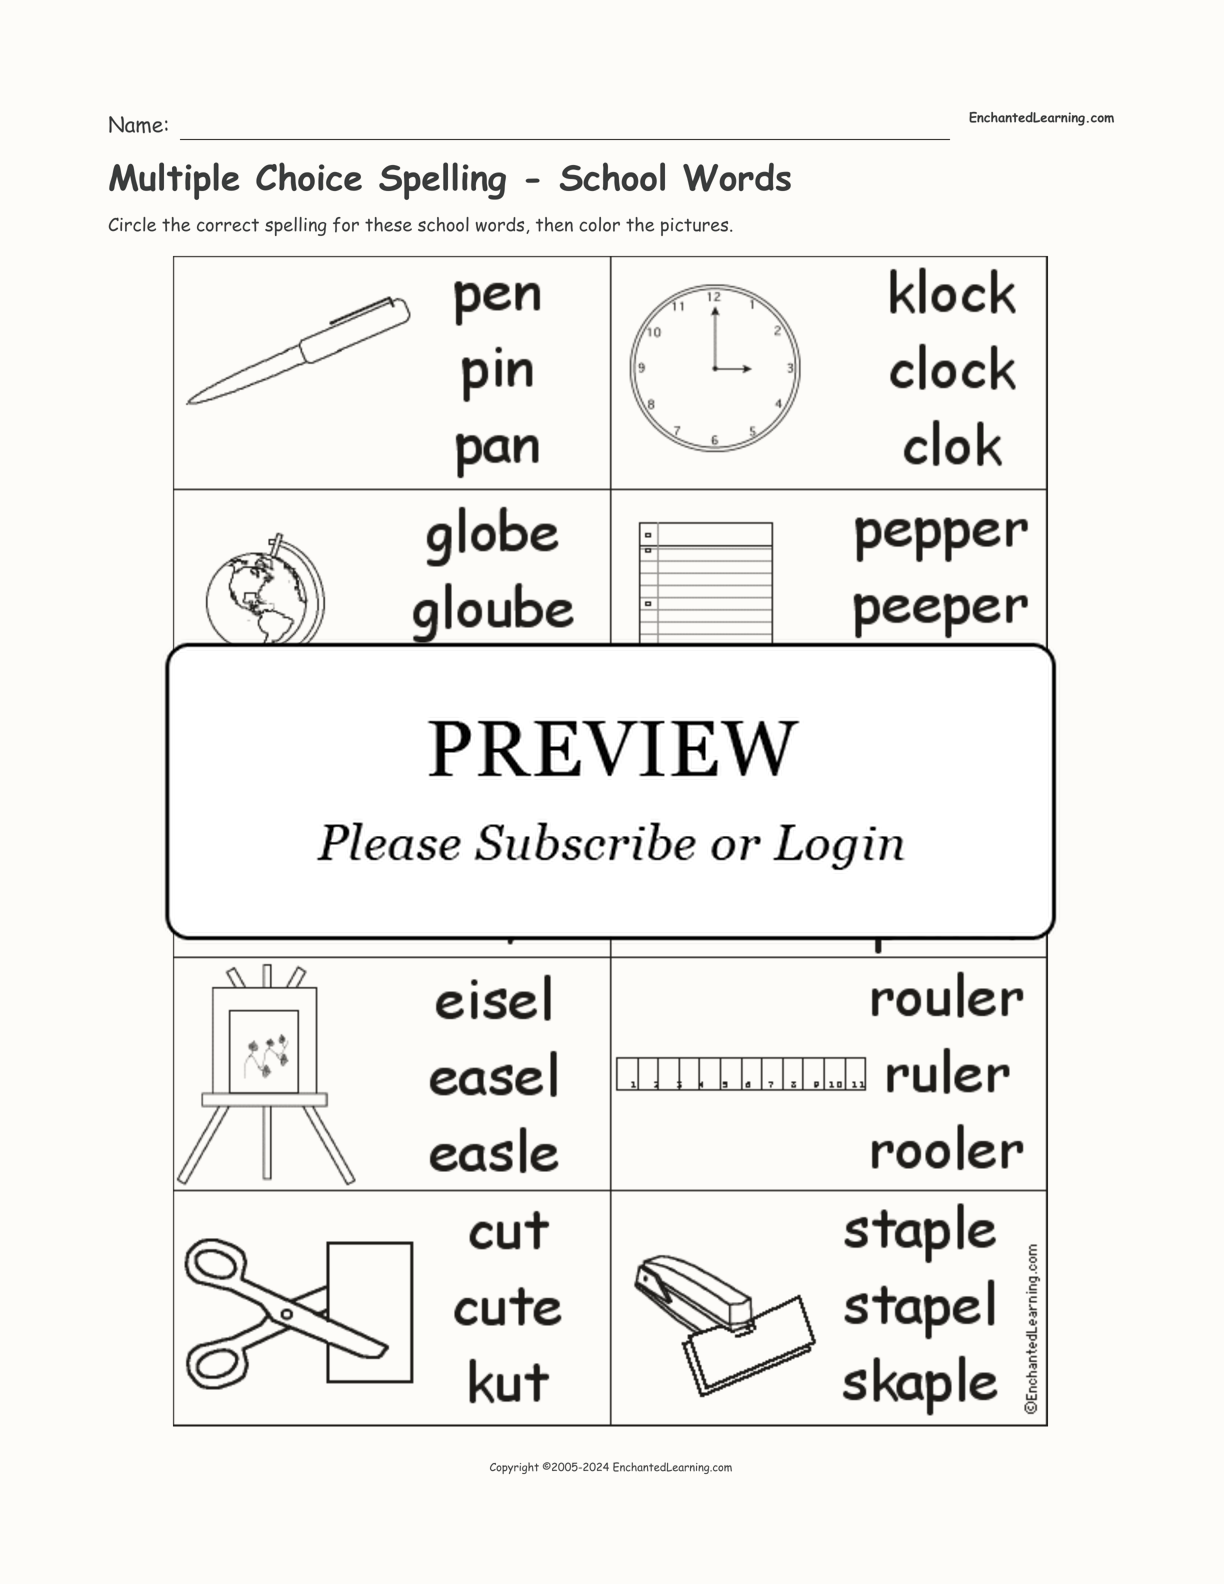 Multiple Choice Spelling -  School Words interactive worksheet page 1